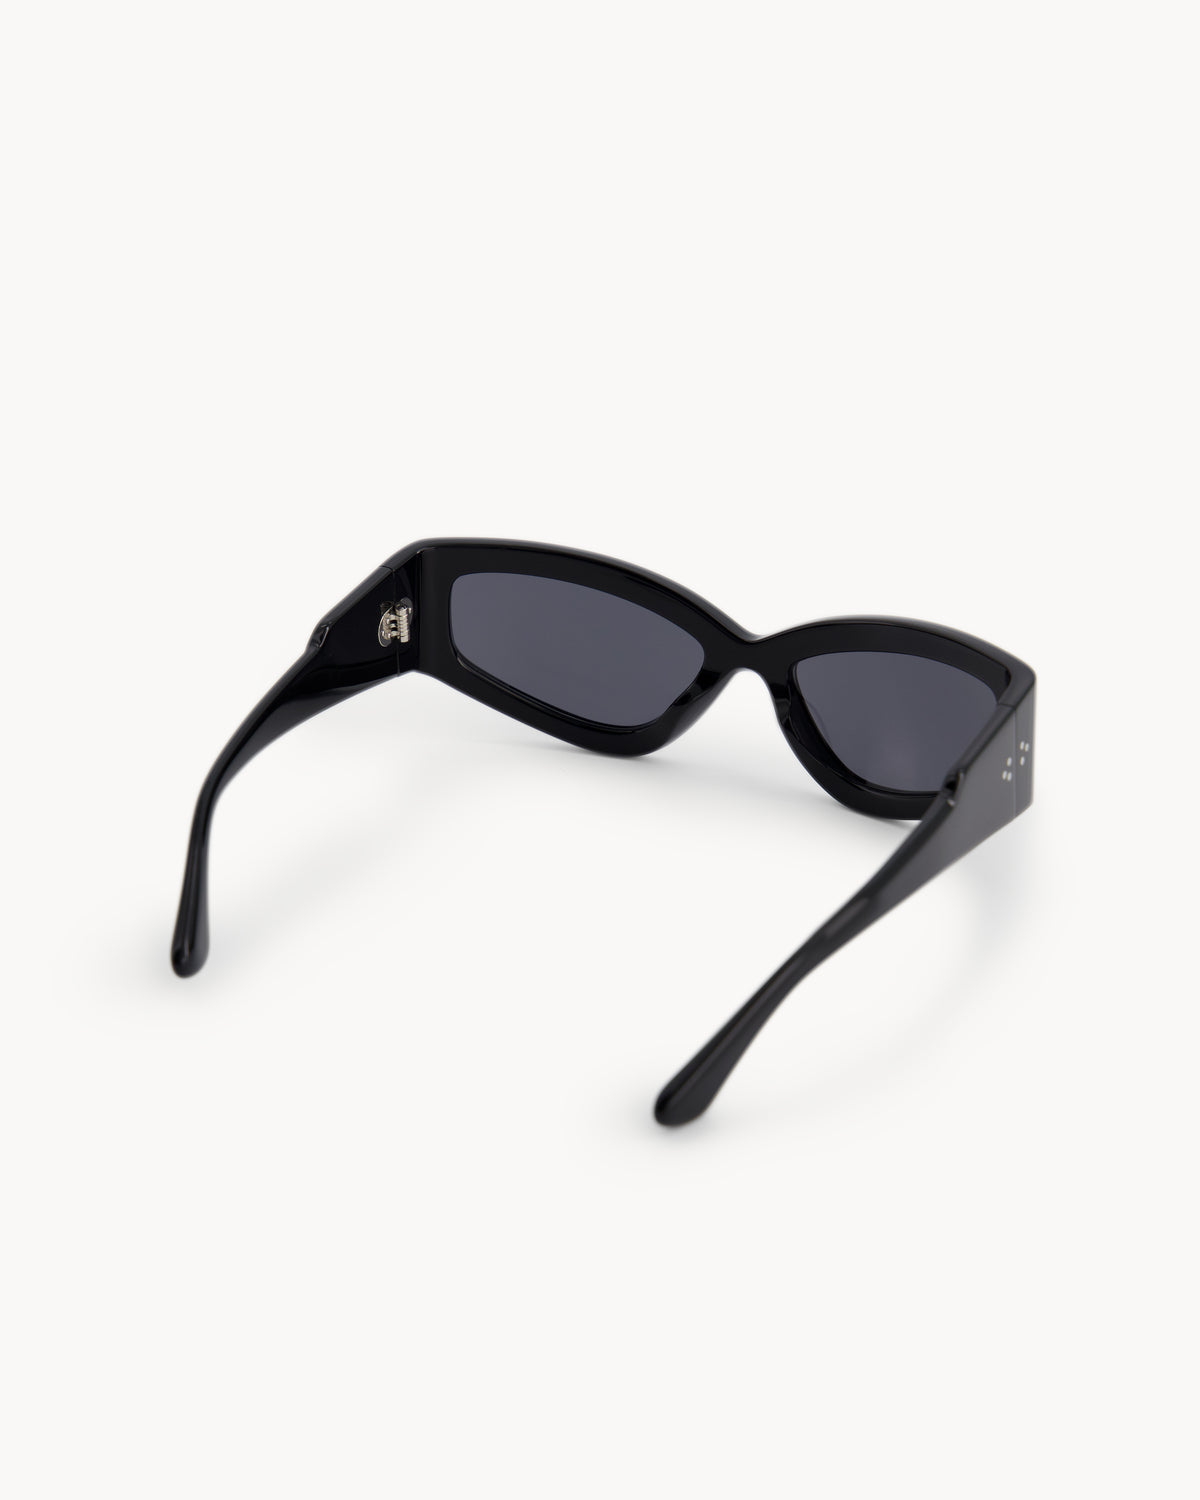 Port Tanger Shyan Sunglasses in Black Acetate and Black Lenses 3